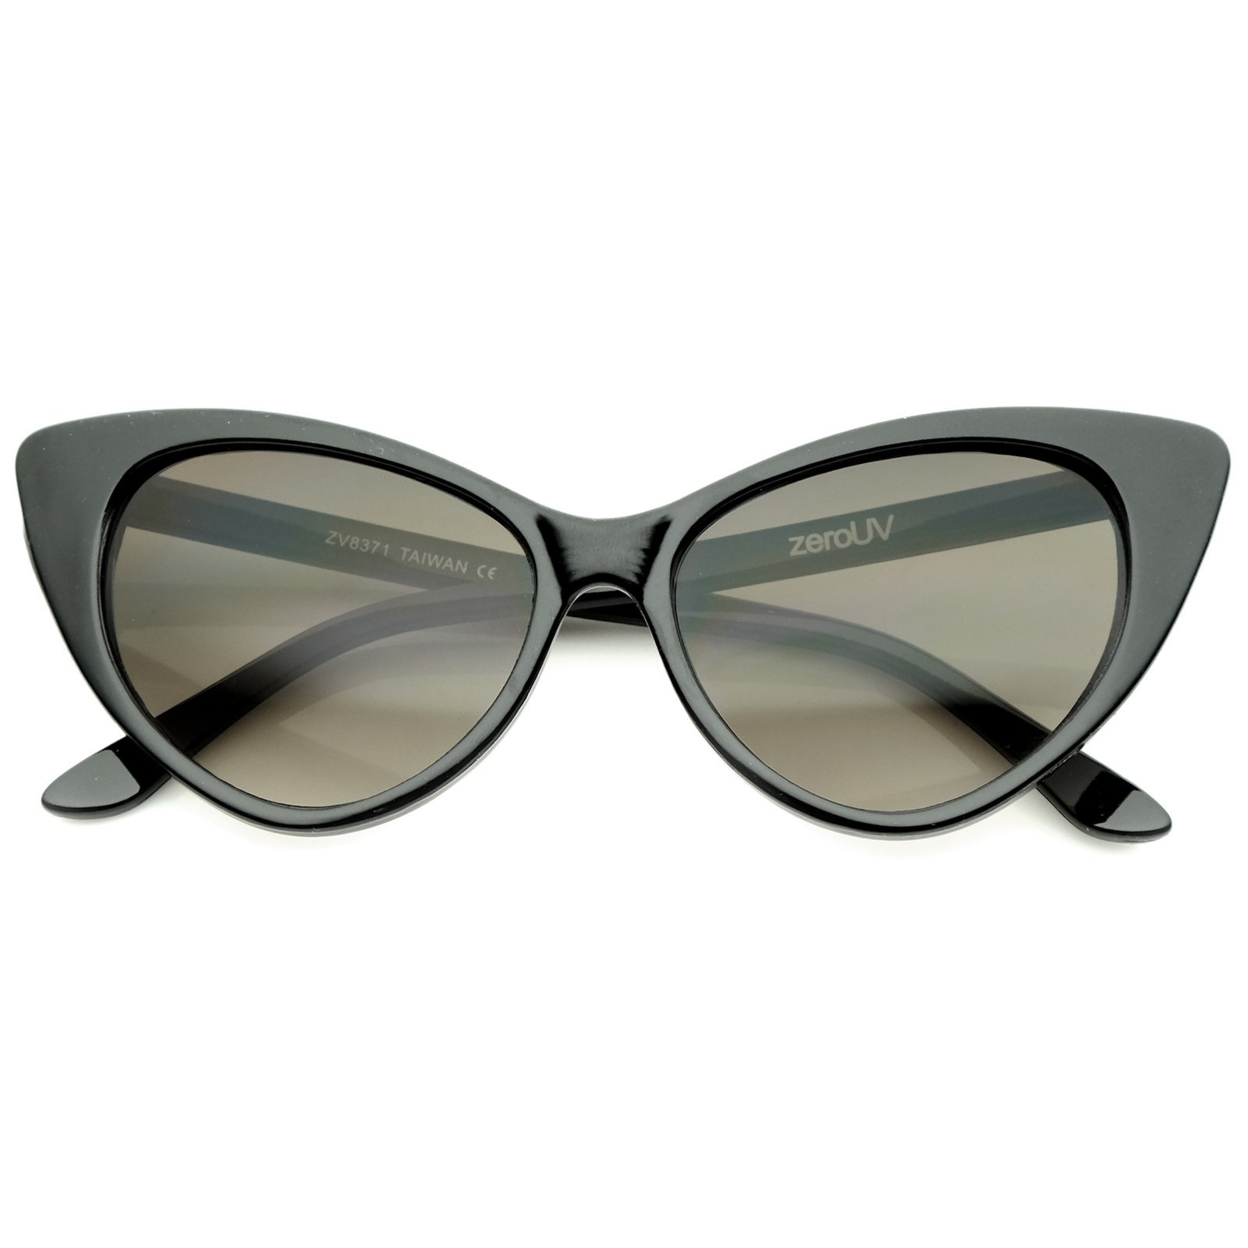 Women's Retro Oversized High Point Cat Eye Sunglasses 55mm - Brown-Fade / Amber